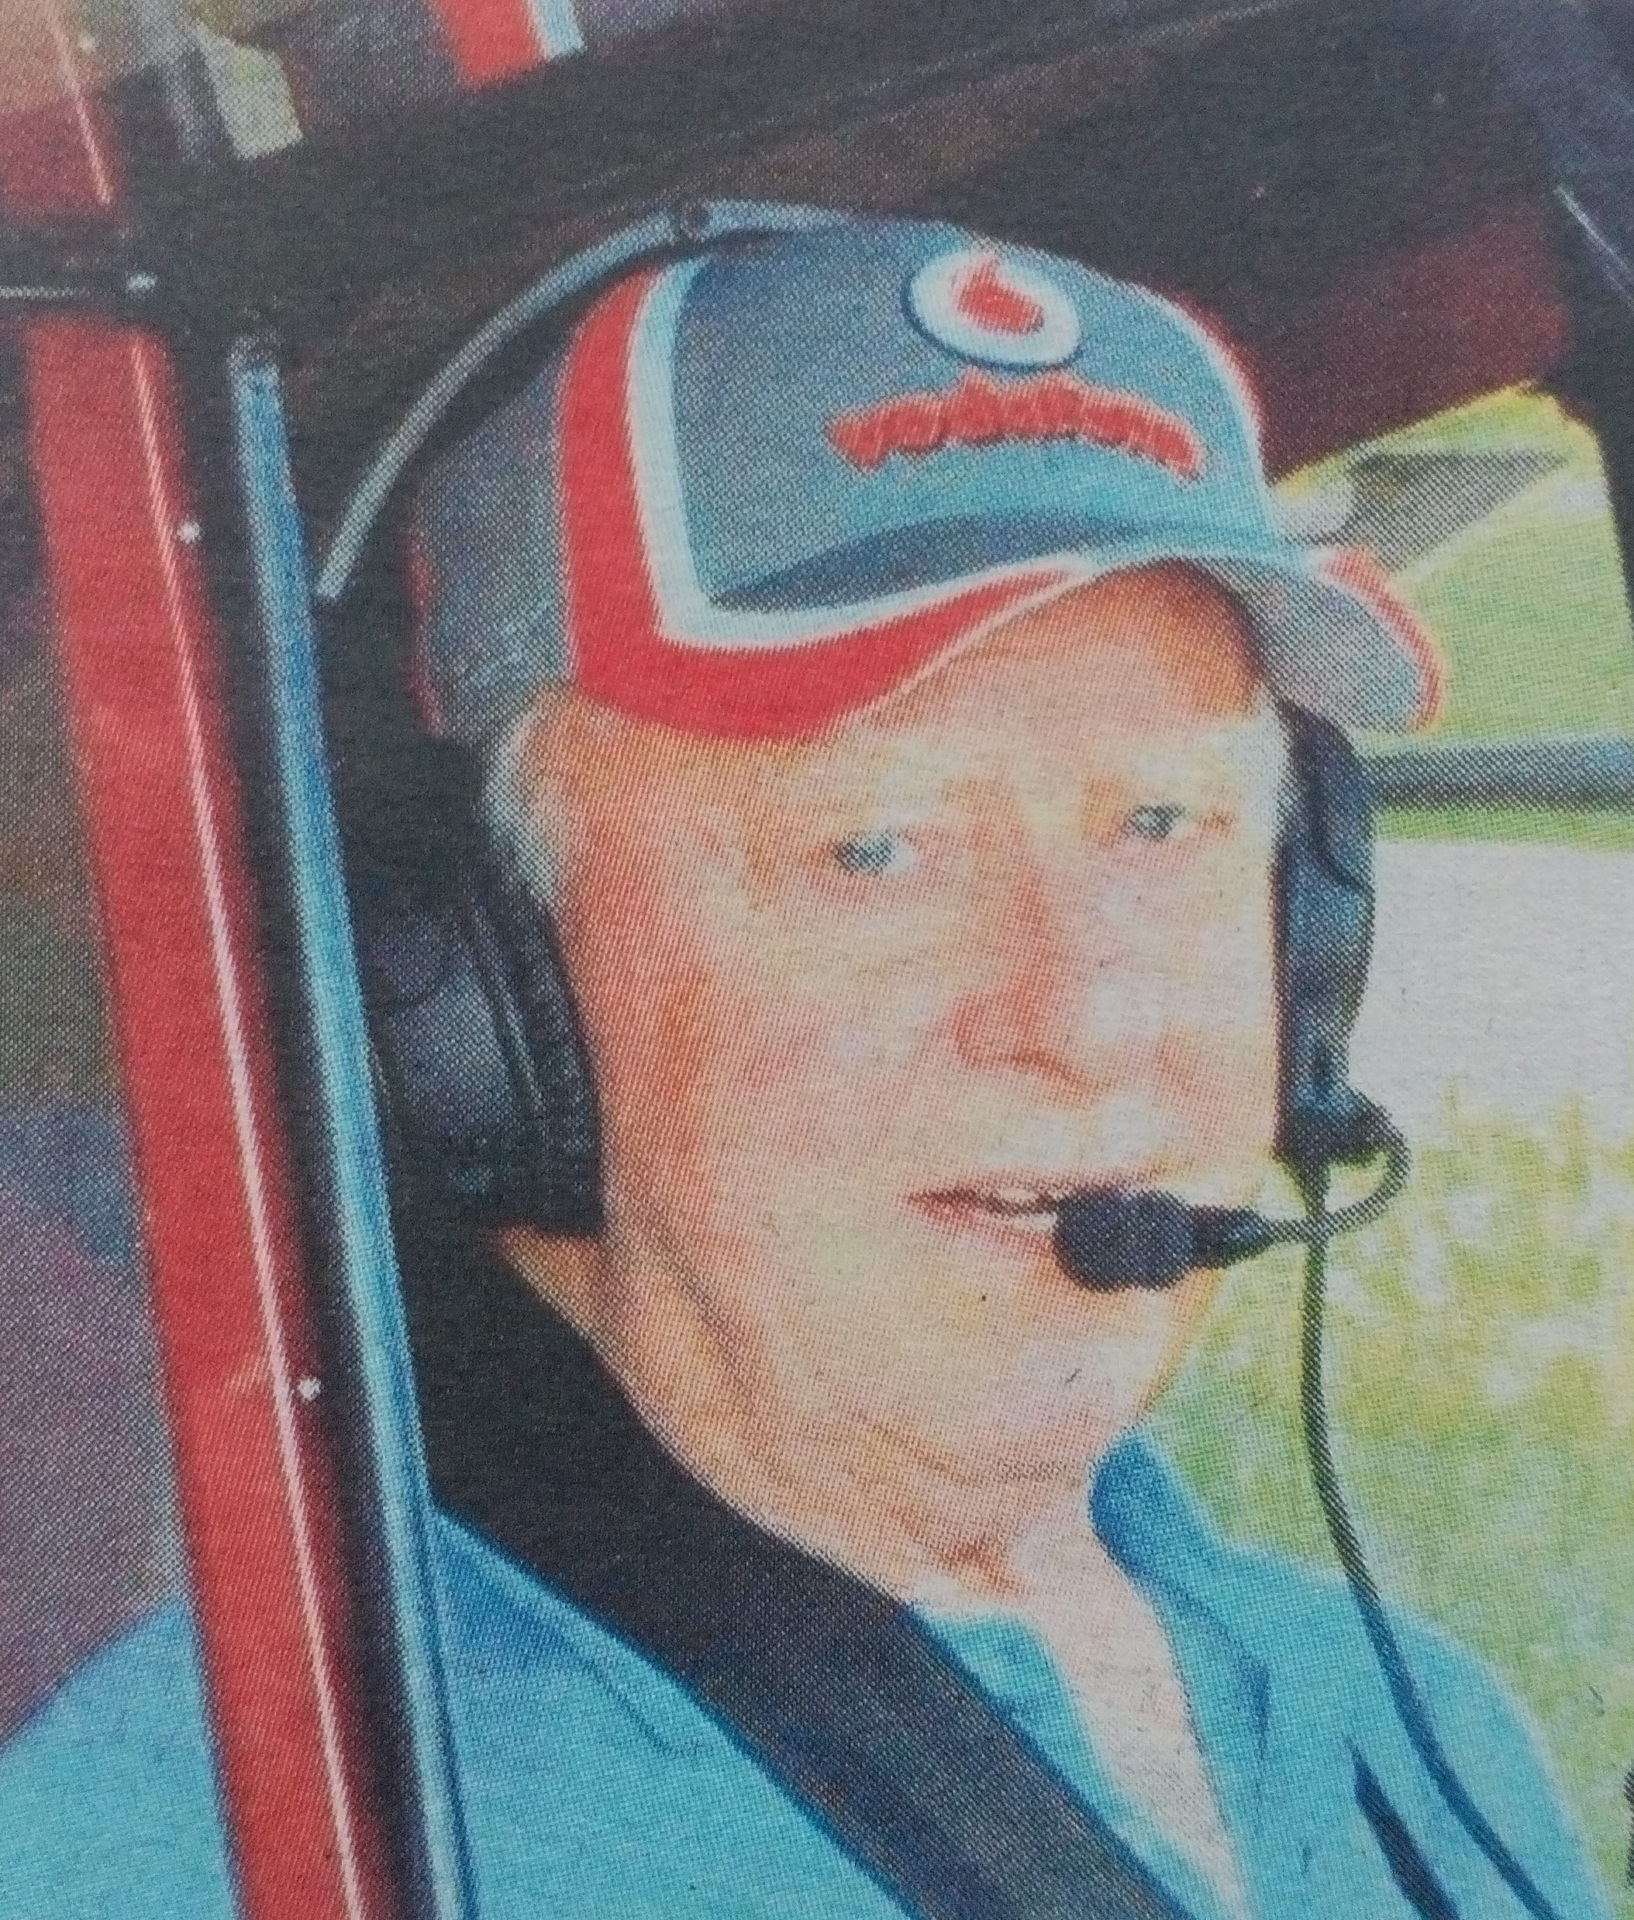 Obituary Image of Bill Parkinson (WHB)